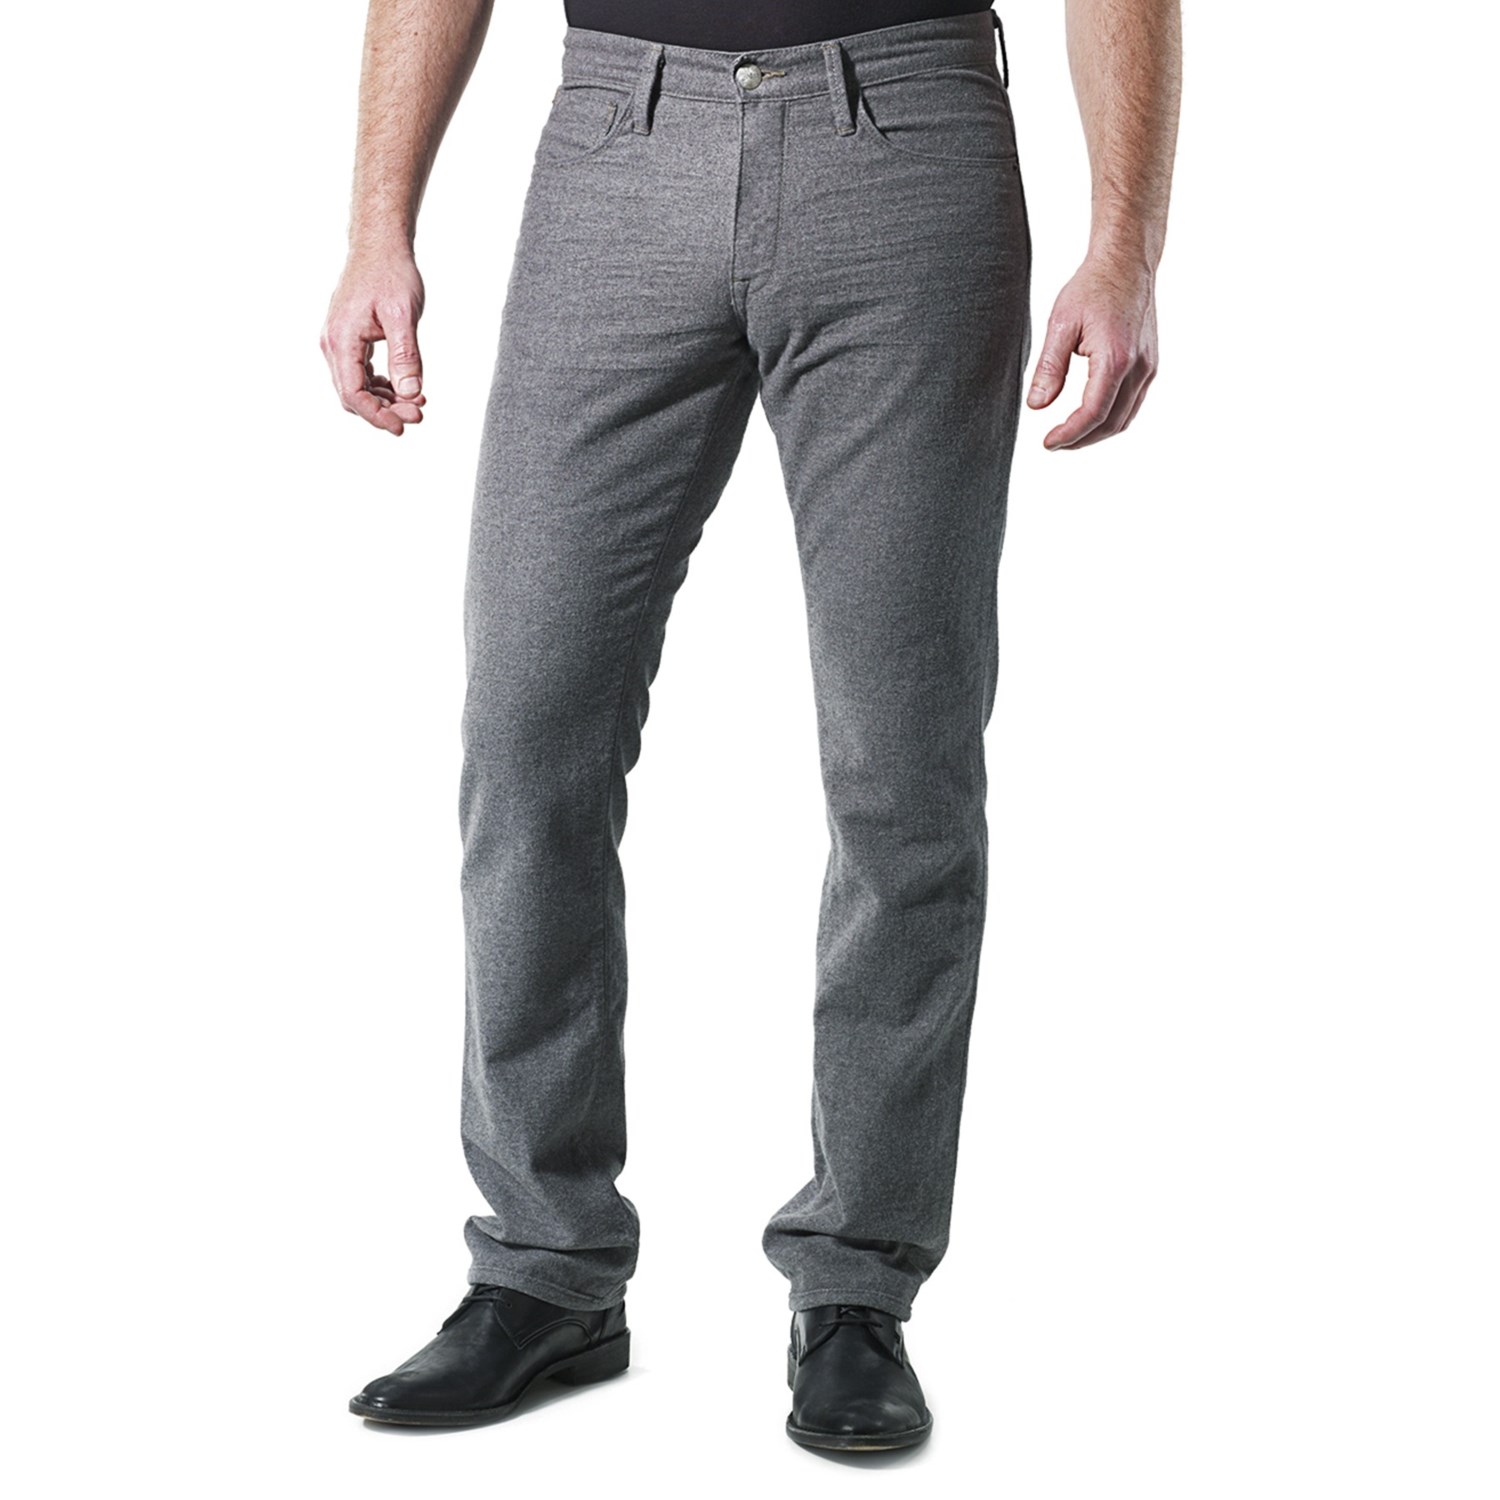 Agave Denim Pragmatist Grey Flannel Jeans - Classic Fit (For Men)